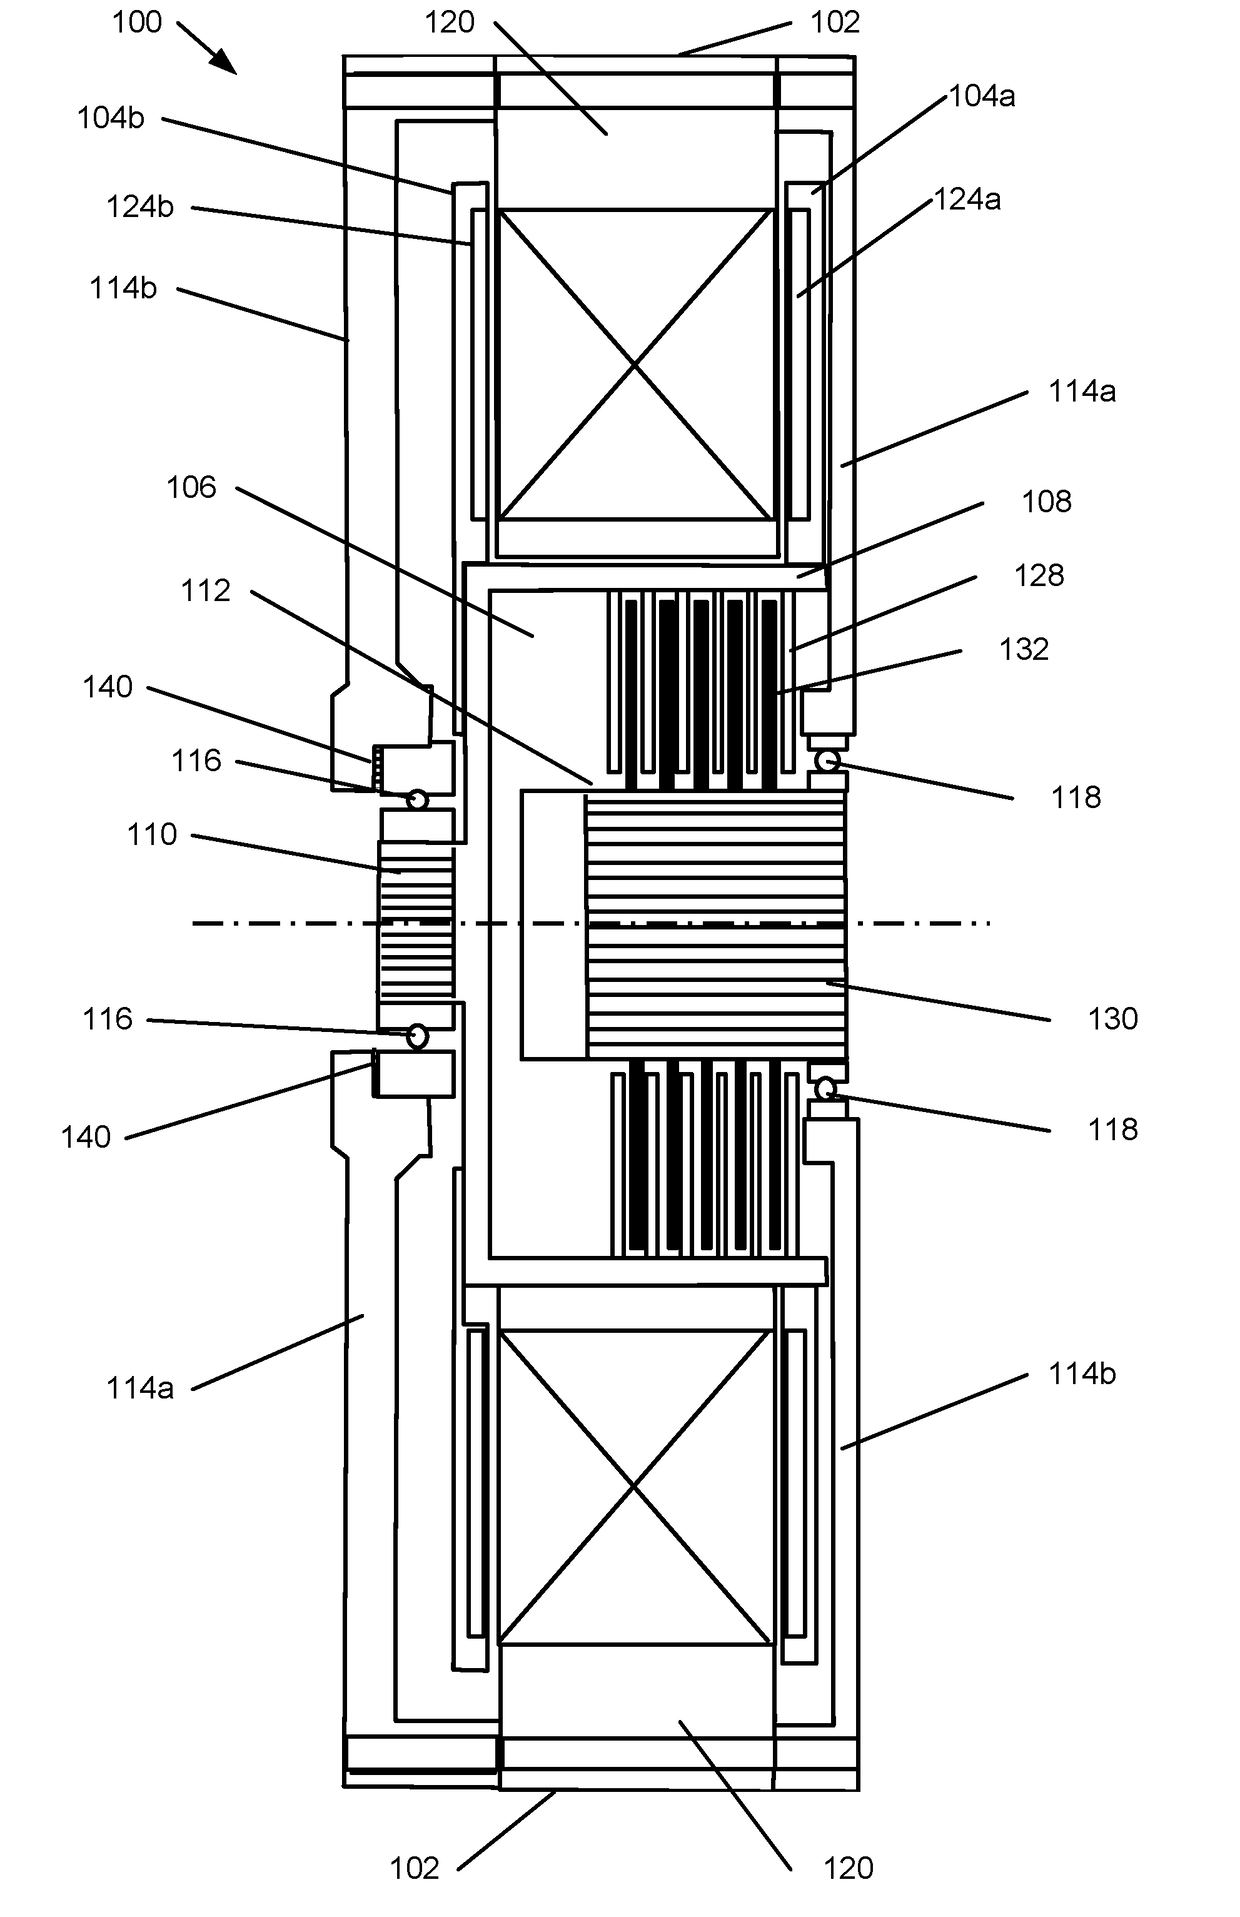 Axial flux machine arrangement